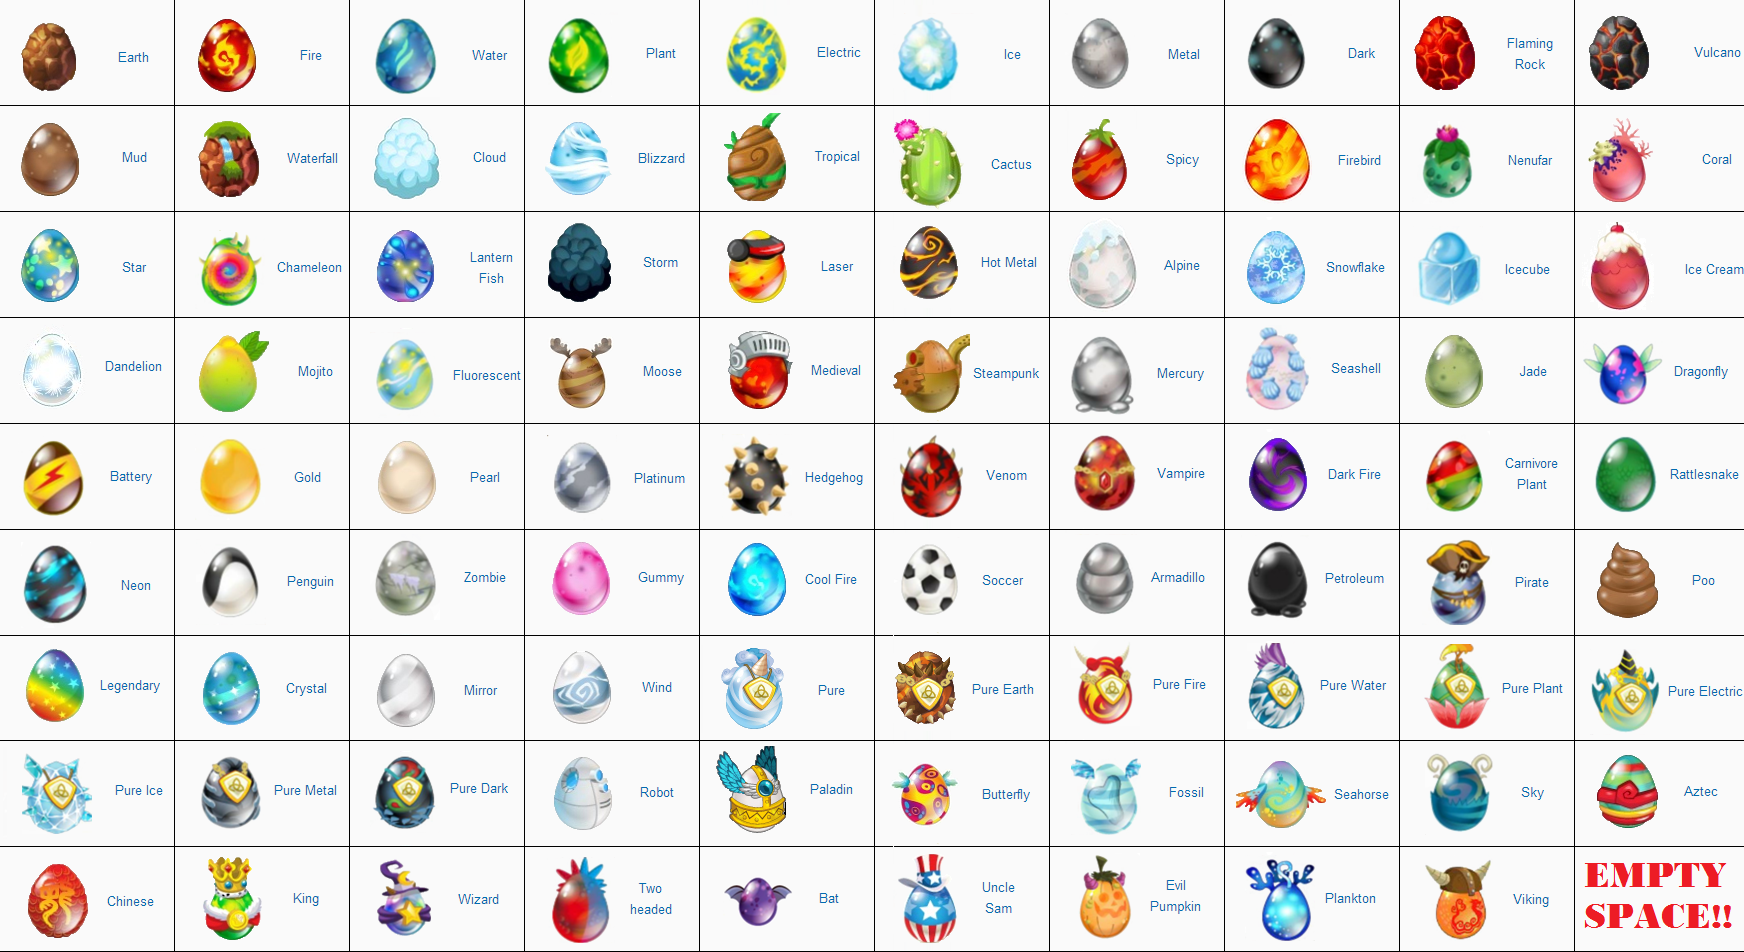 Dragon City Eggs Breeding Guide